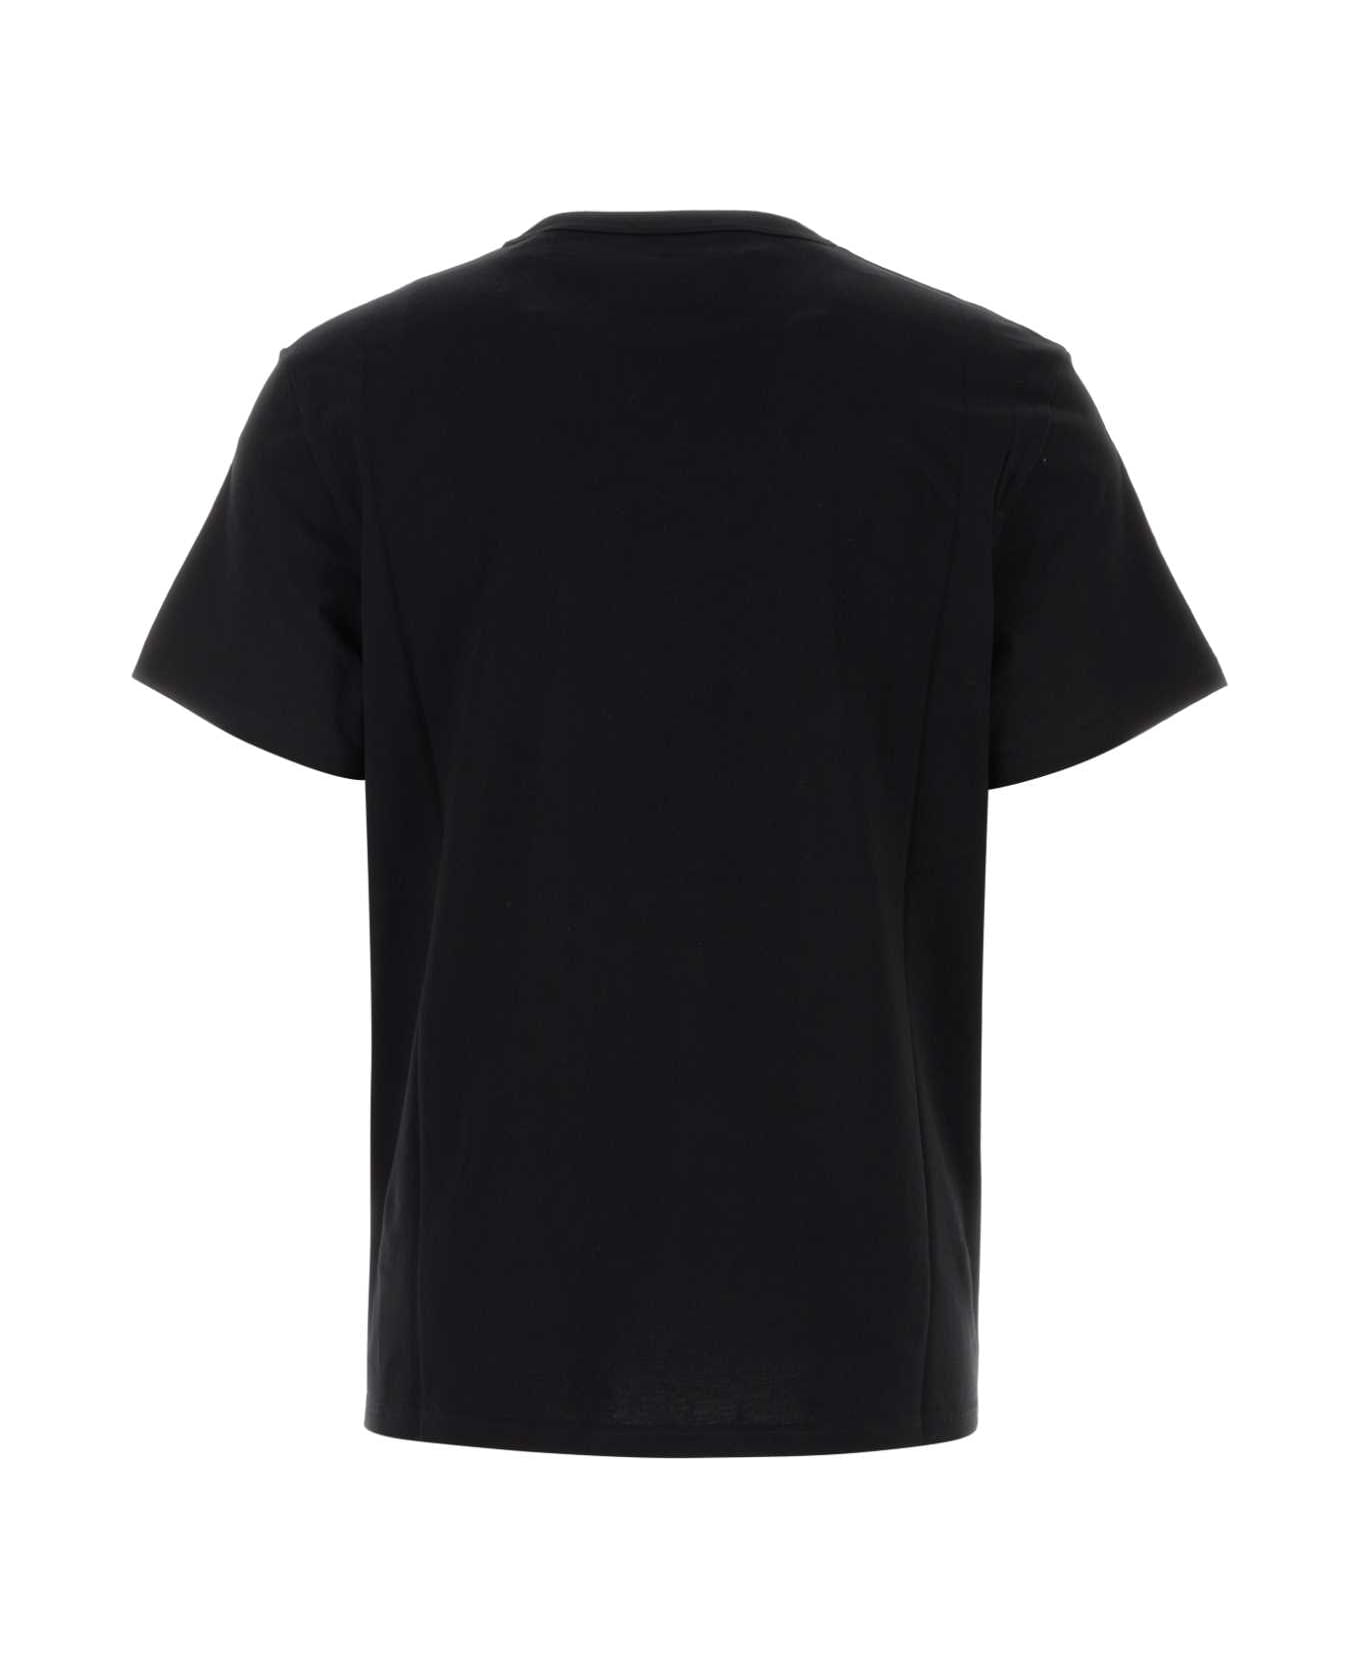 Alexander McQueen Black Cotton T-shirt - Black